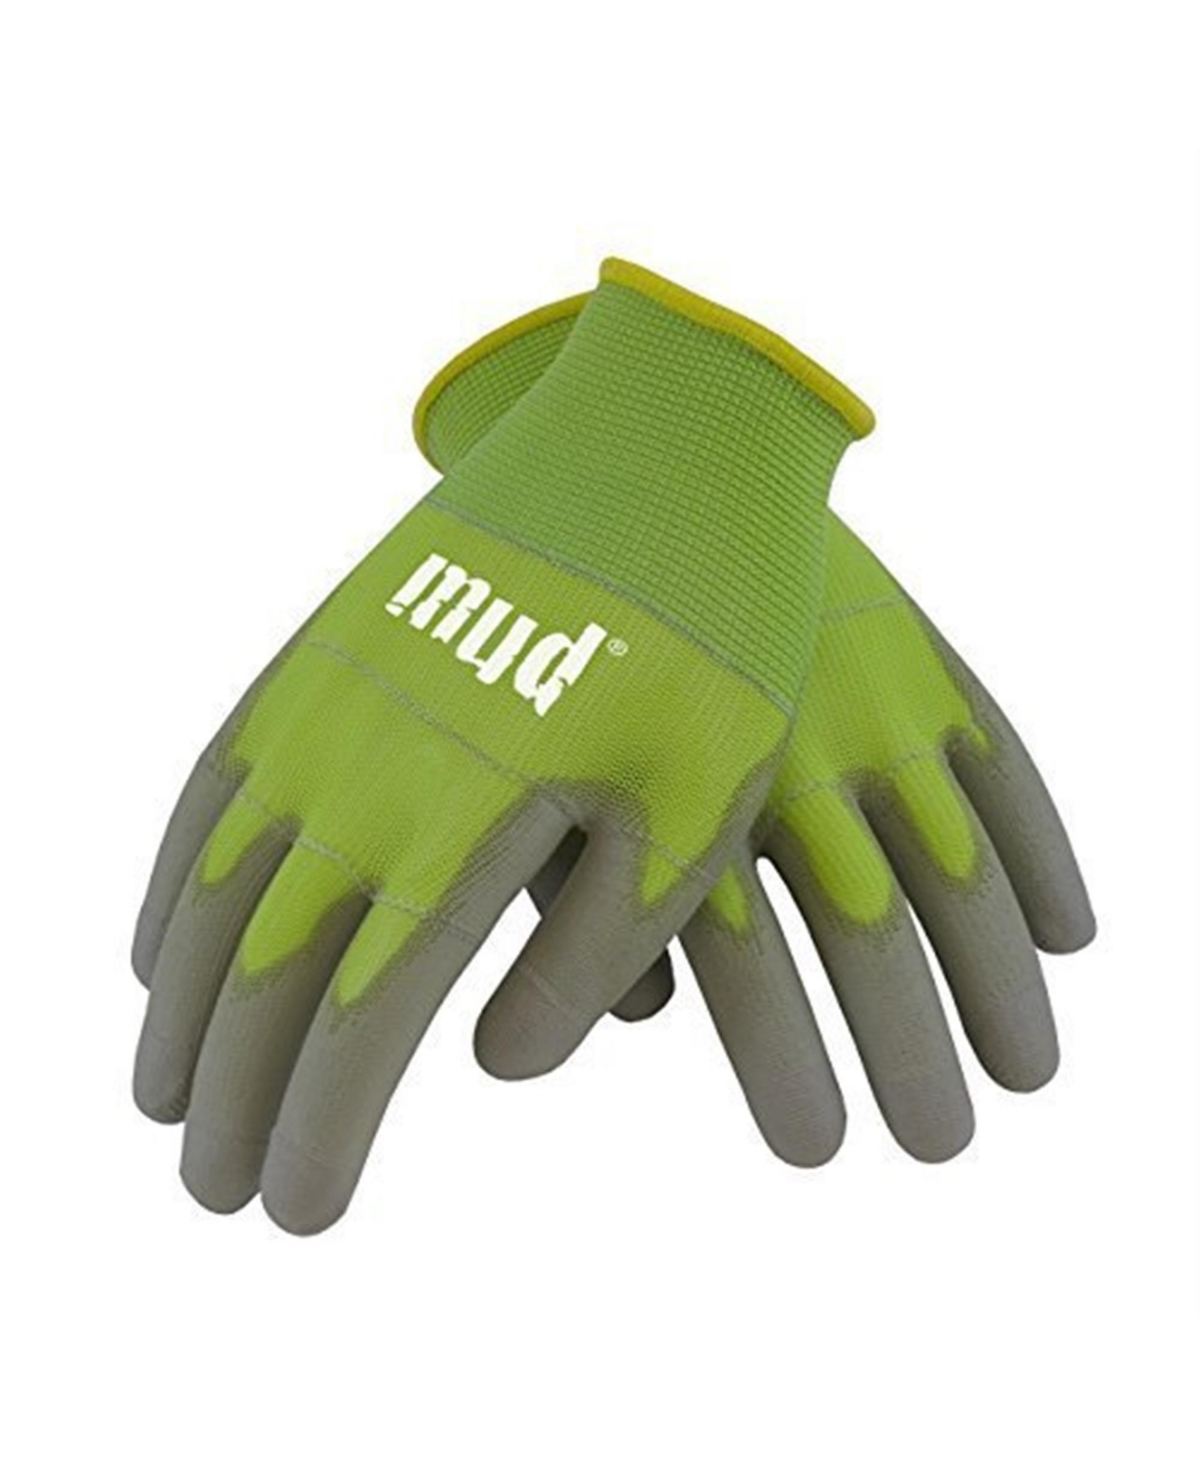 Safety Works 028A Smart Mud Garden Gloves, Small, Apple - Green